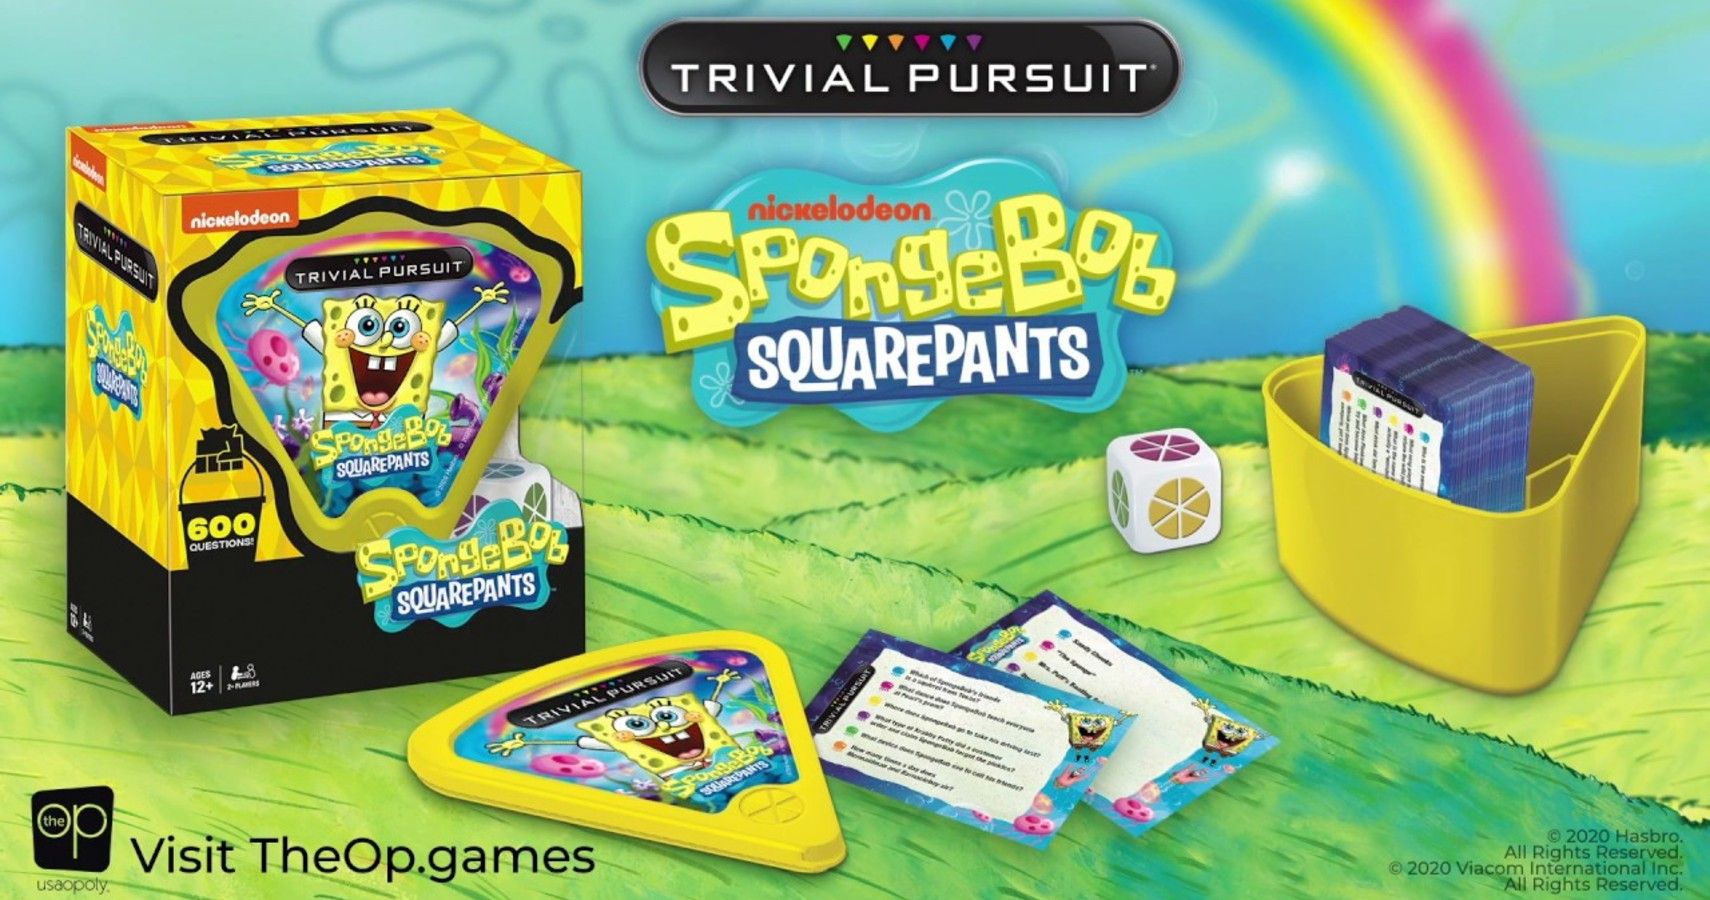 Spongebob Trivial Pursuit packaging